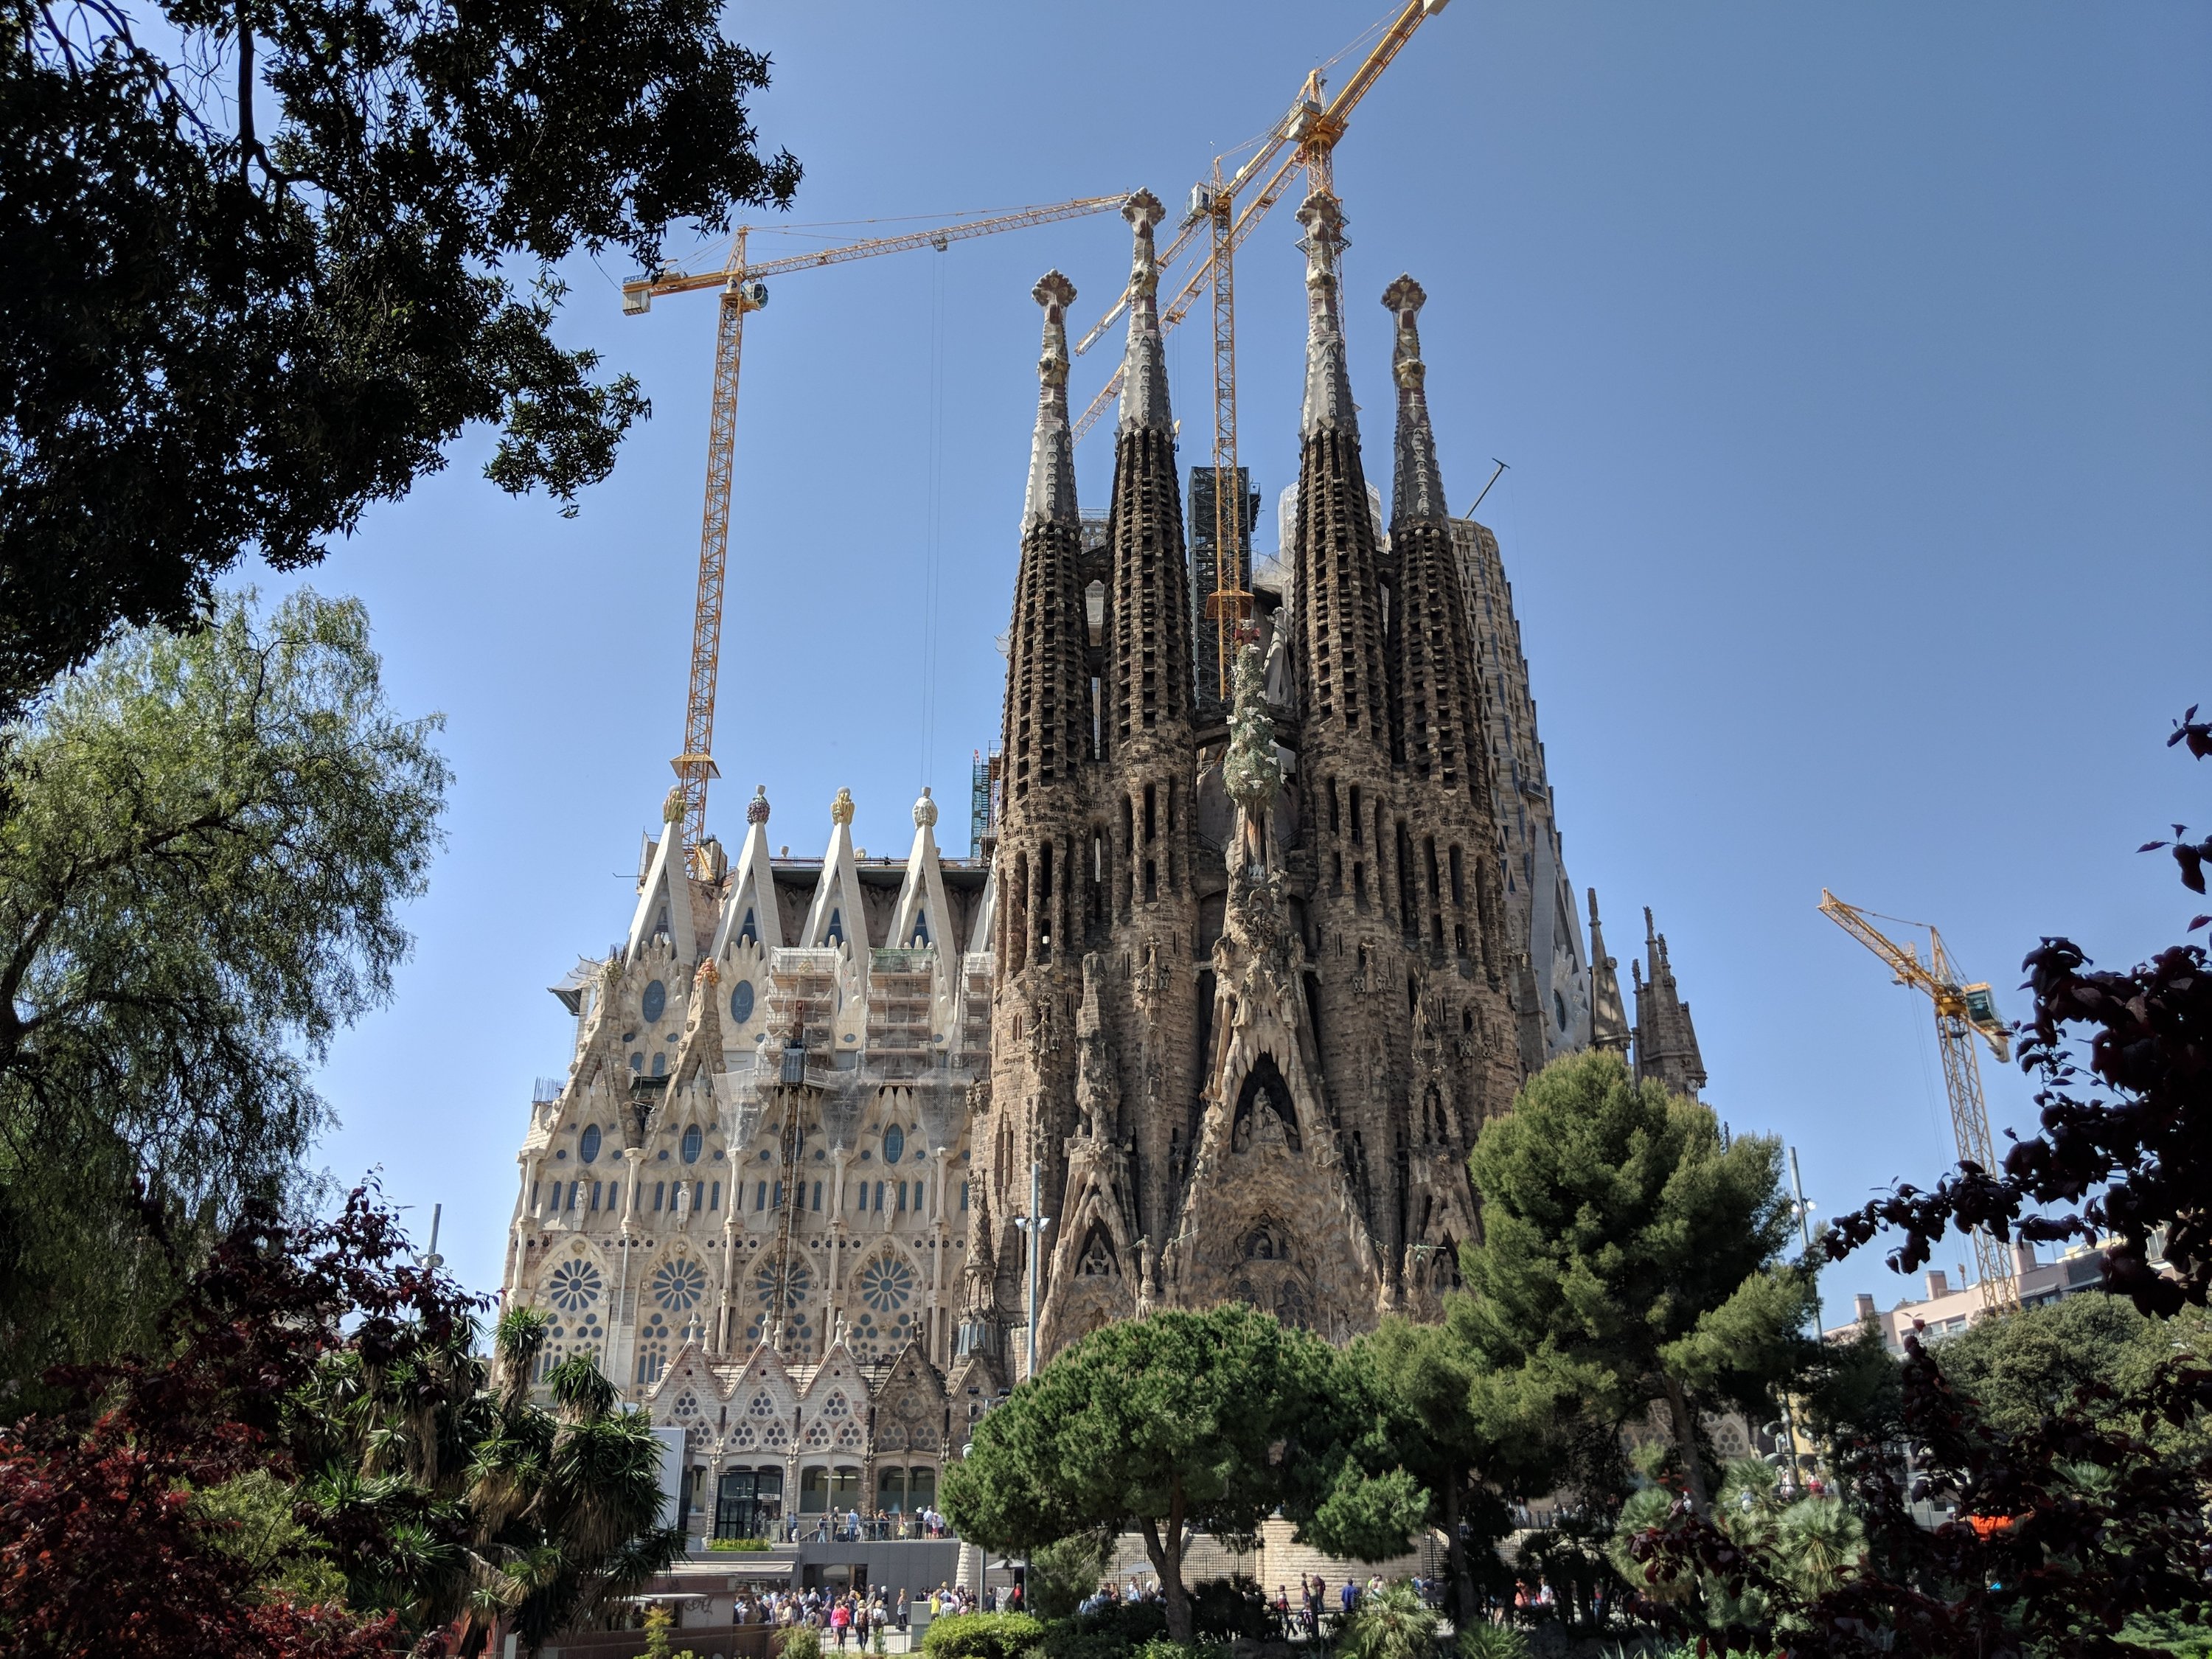 Barcelona Day 7: Visiting Sagrada Familia • Finding New Eyes